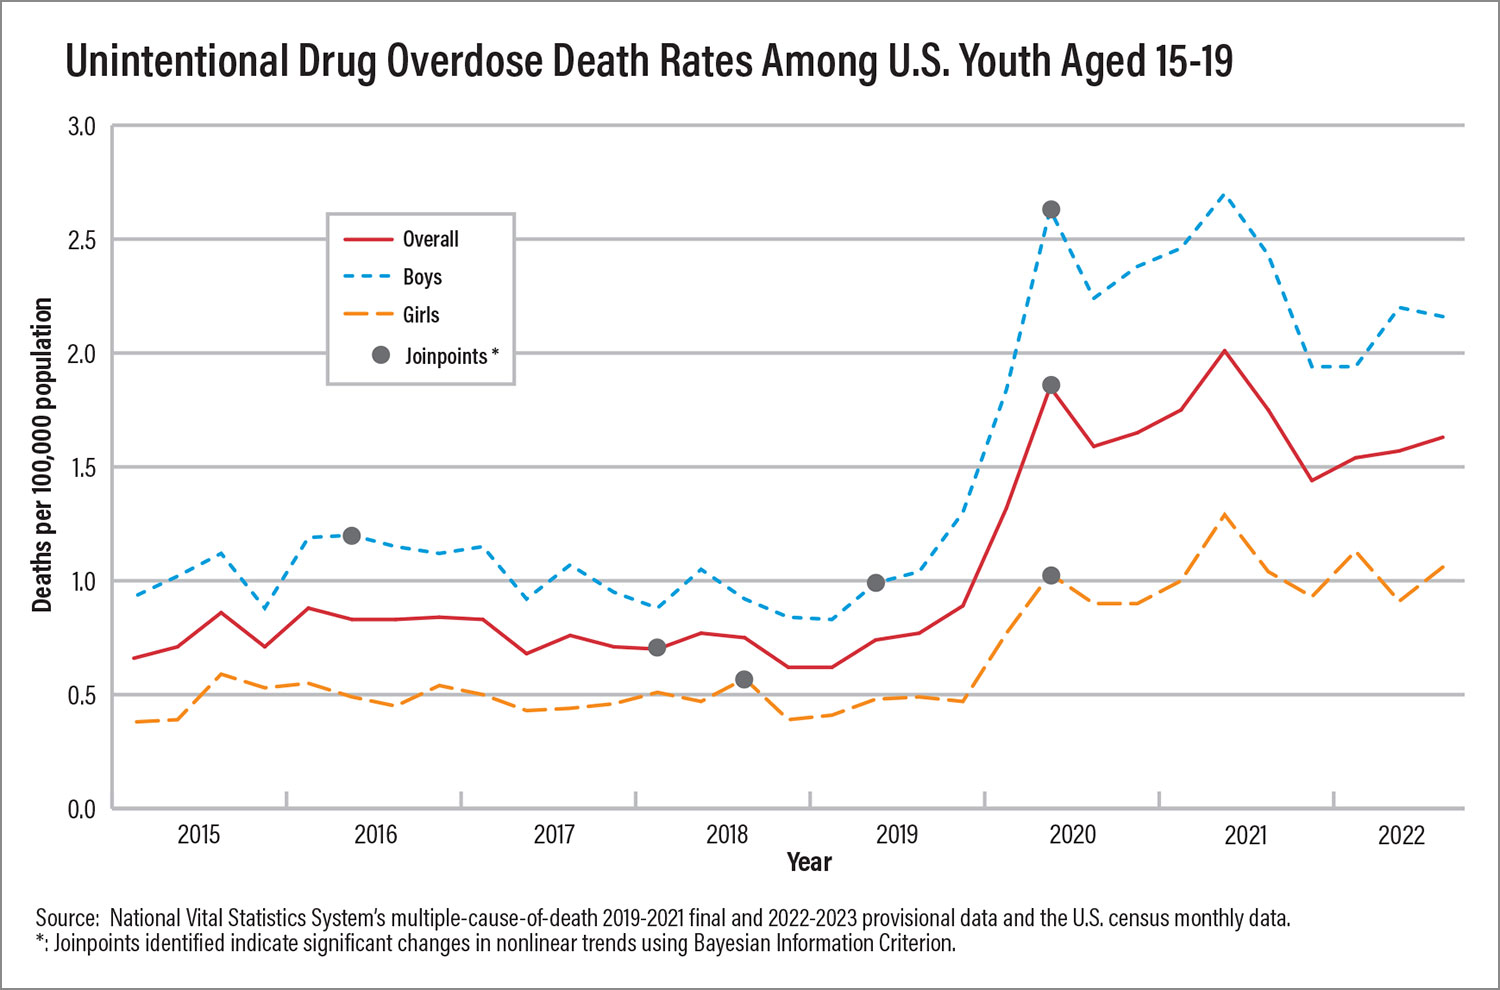 Figure of Unintentional Drug Overdose Death Rates Among U.S. Youth Aged 15-19.